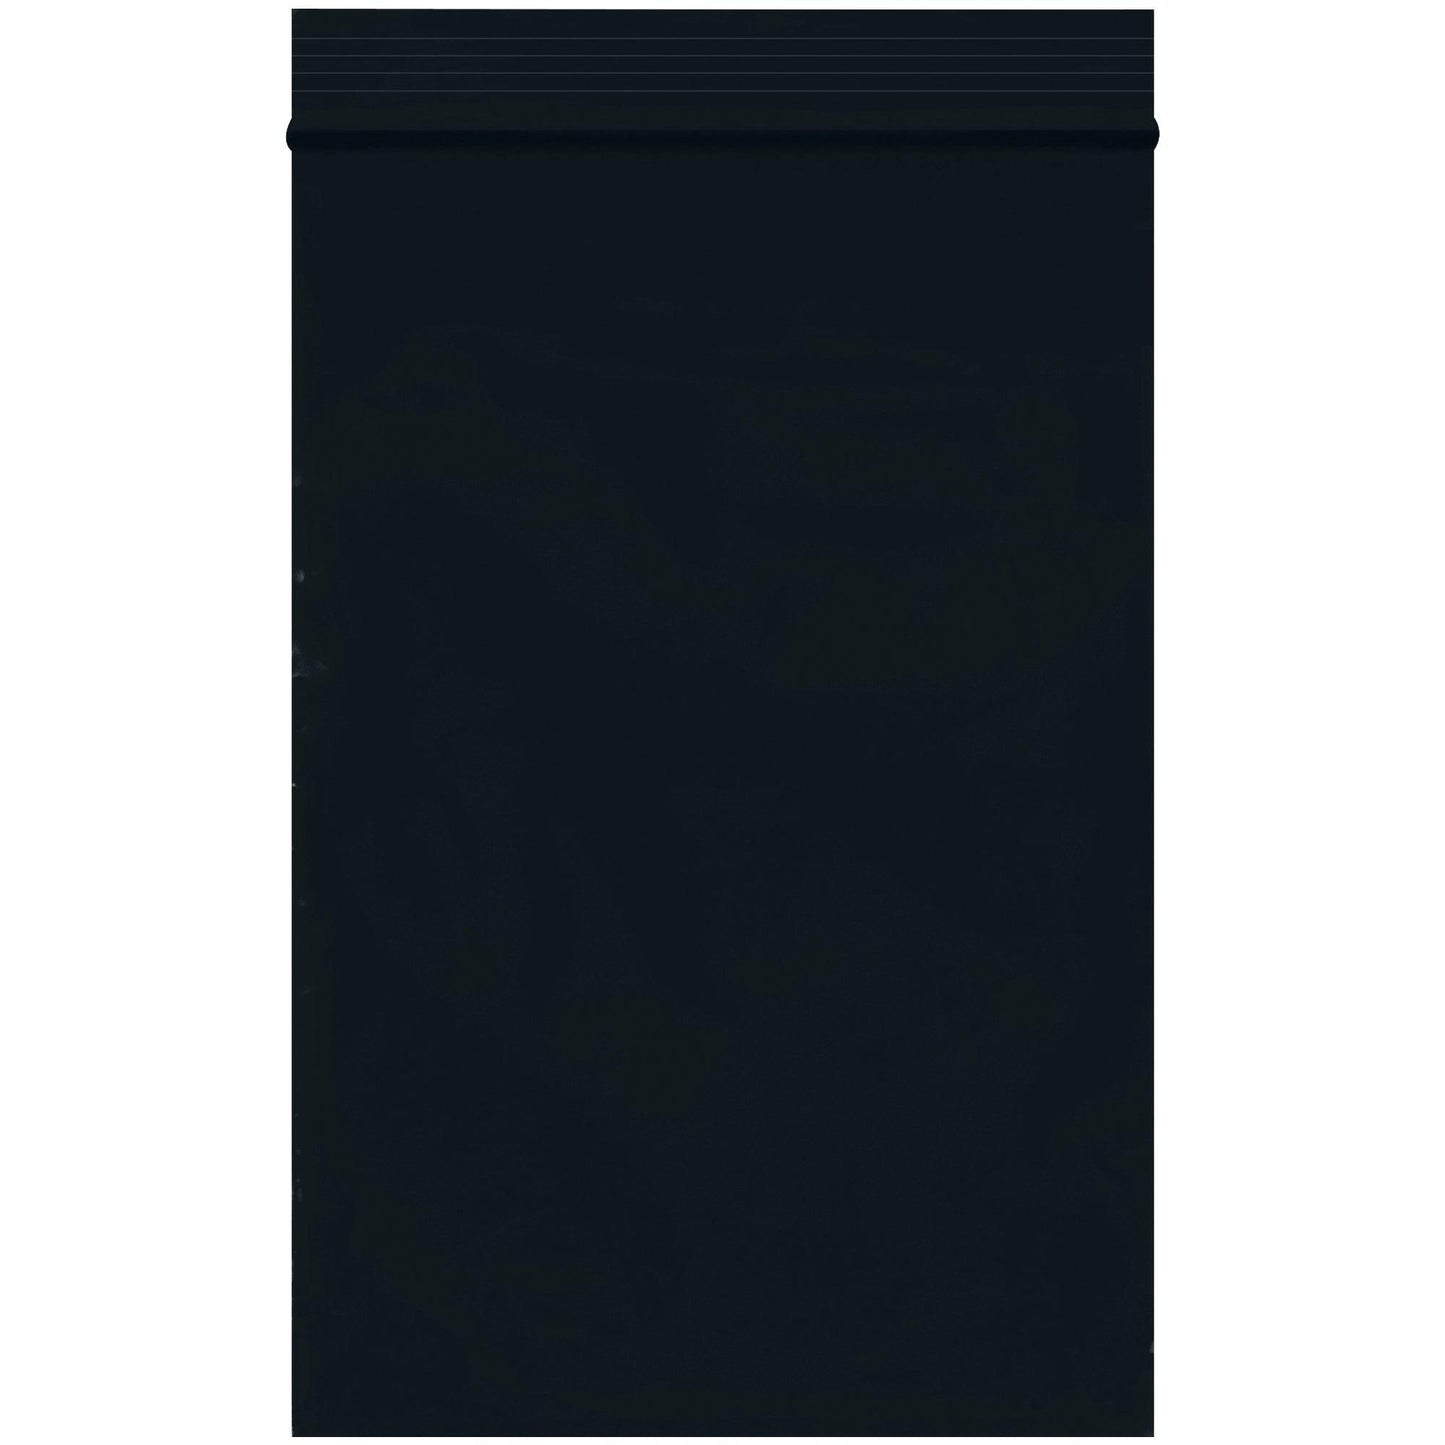 4 x 6" - 2 Mil Black Reclosable Poly Bags - PB3565BK